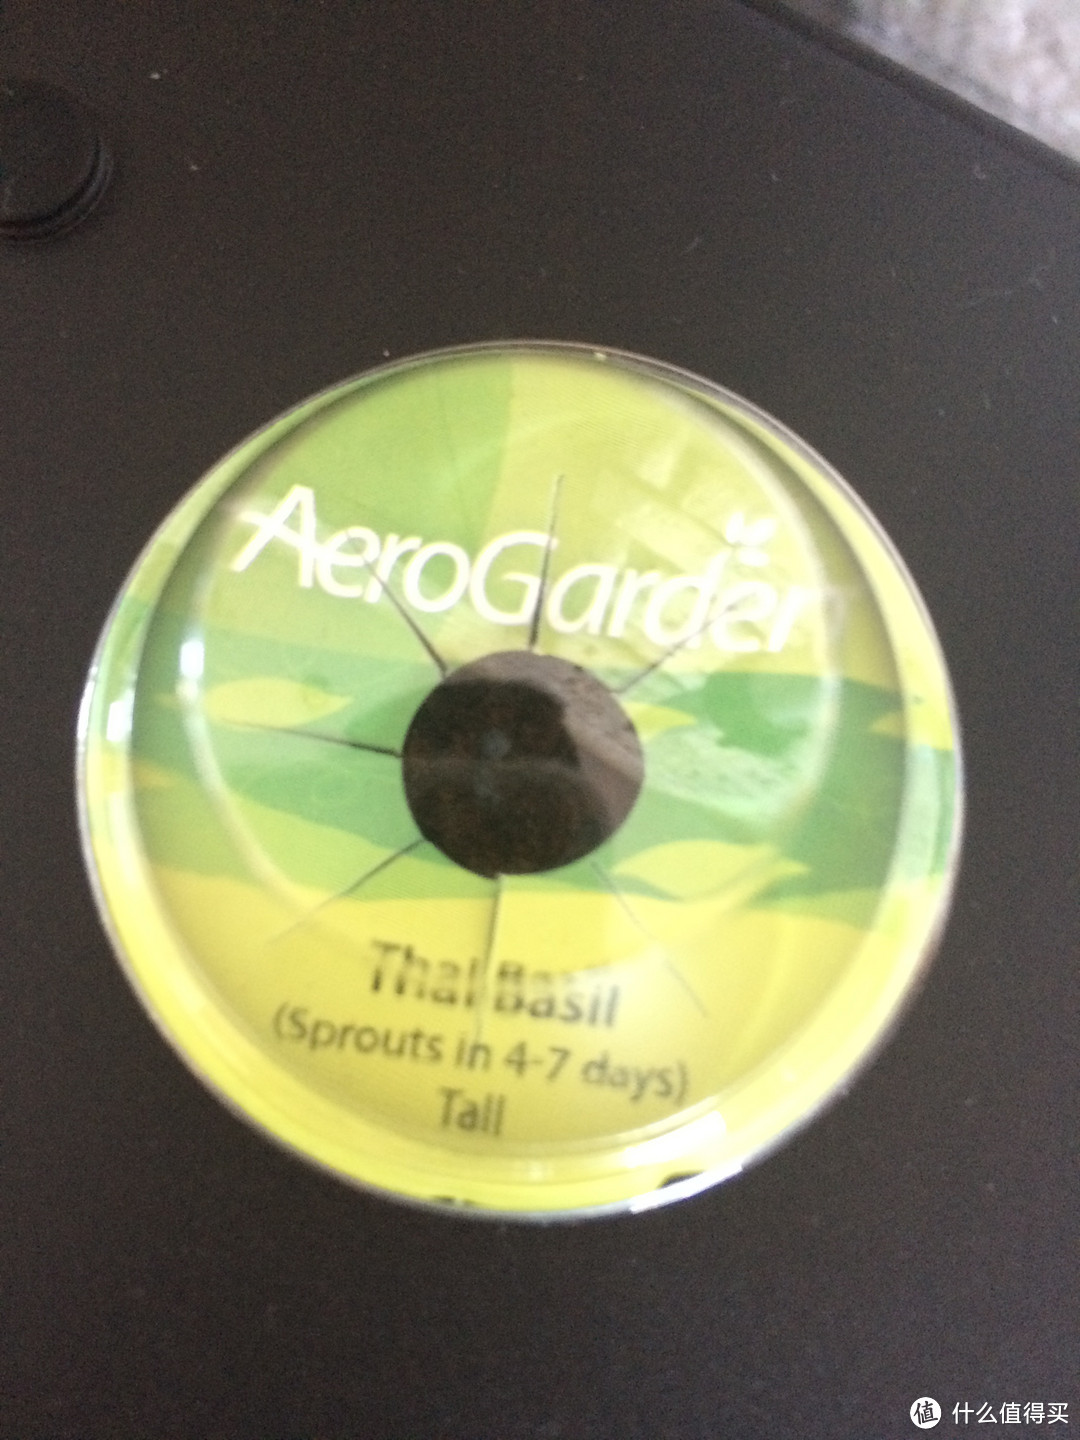 AeroGarden 7-Pod LED Indoor Garden 室内花园 种植小记